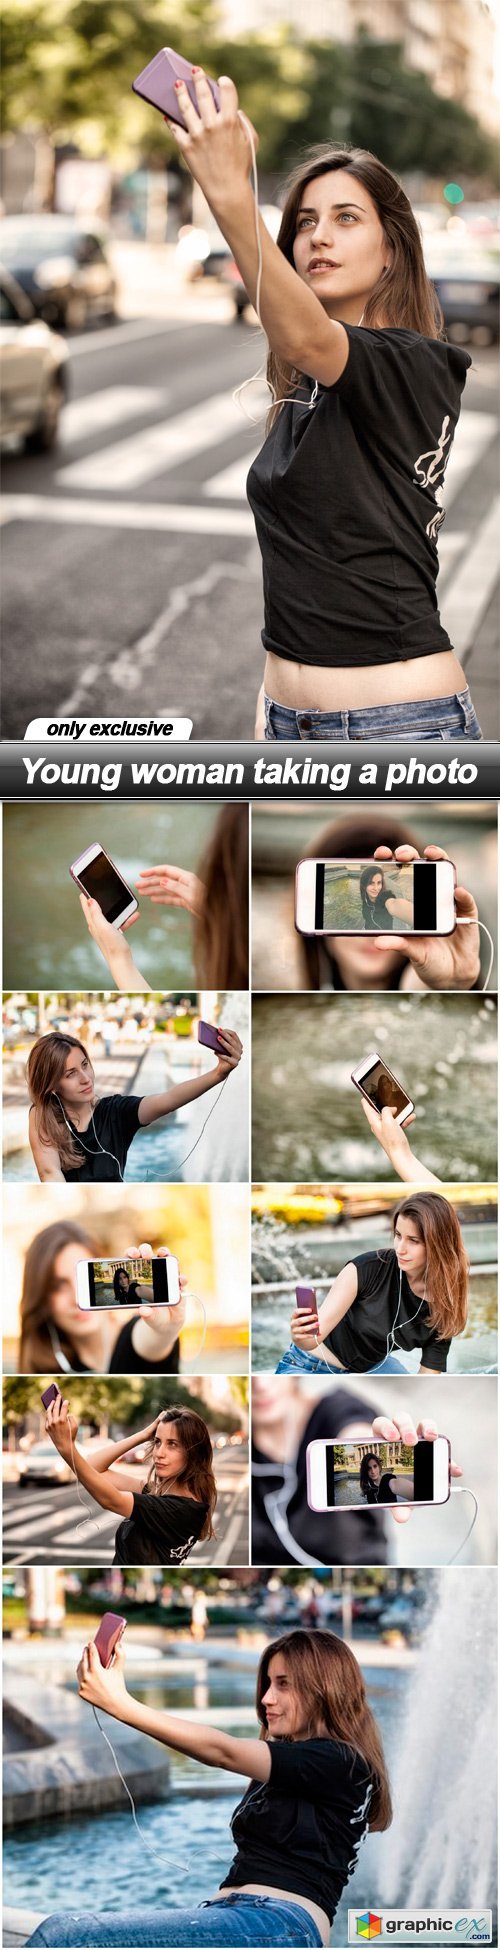 Young woman taking a photo - 10 UHQ JPEG